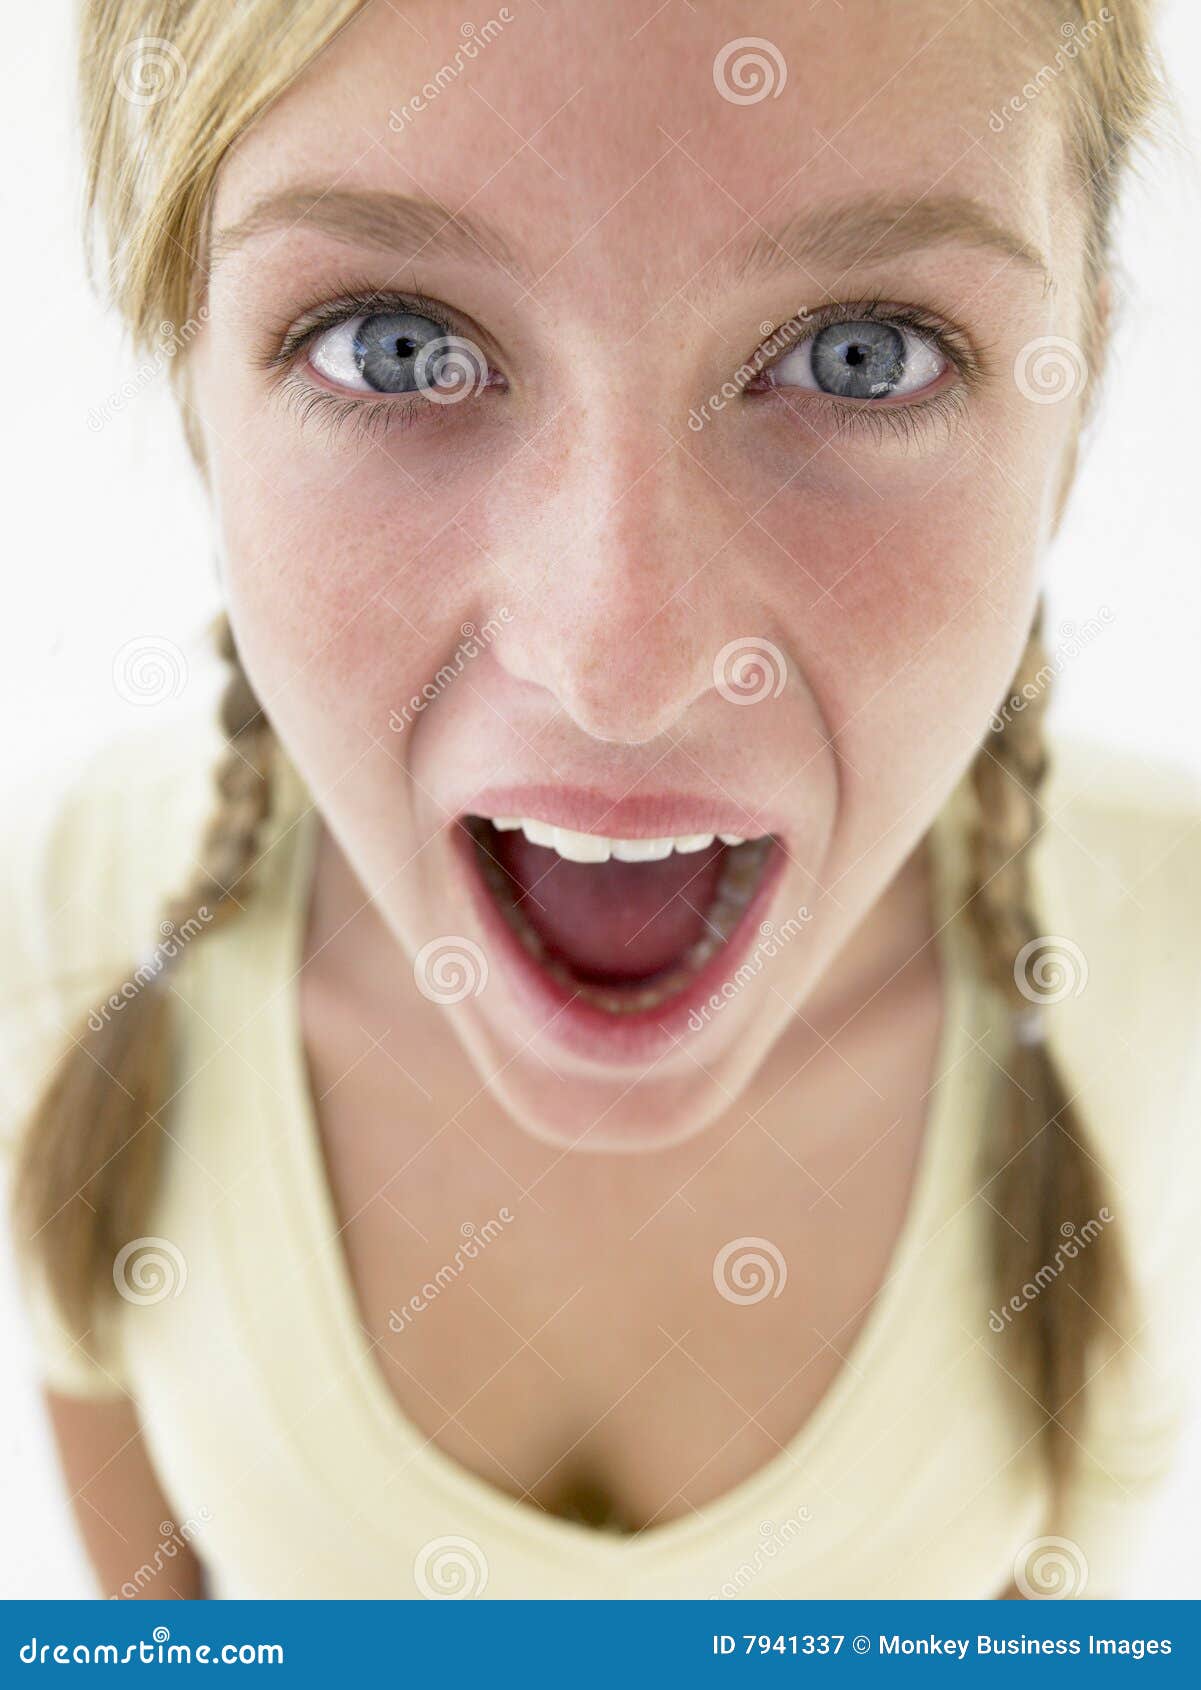 Teenage Girl Looking Shocked Stock Image Image Of Person